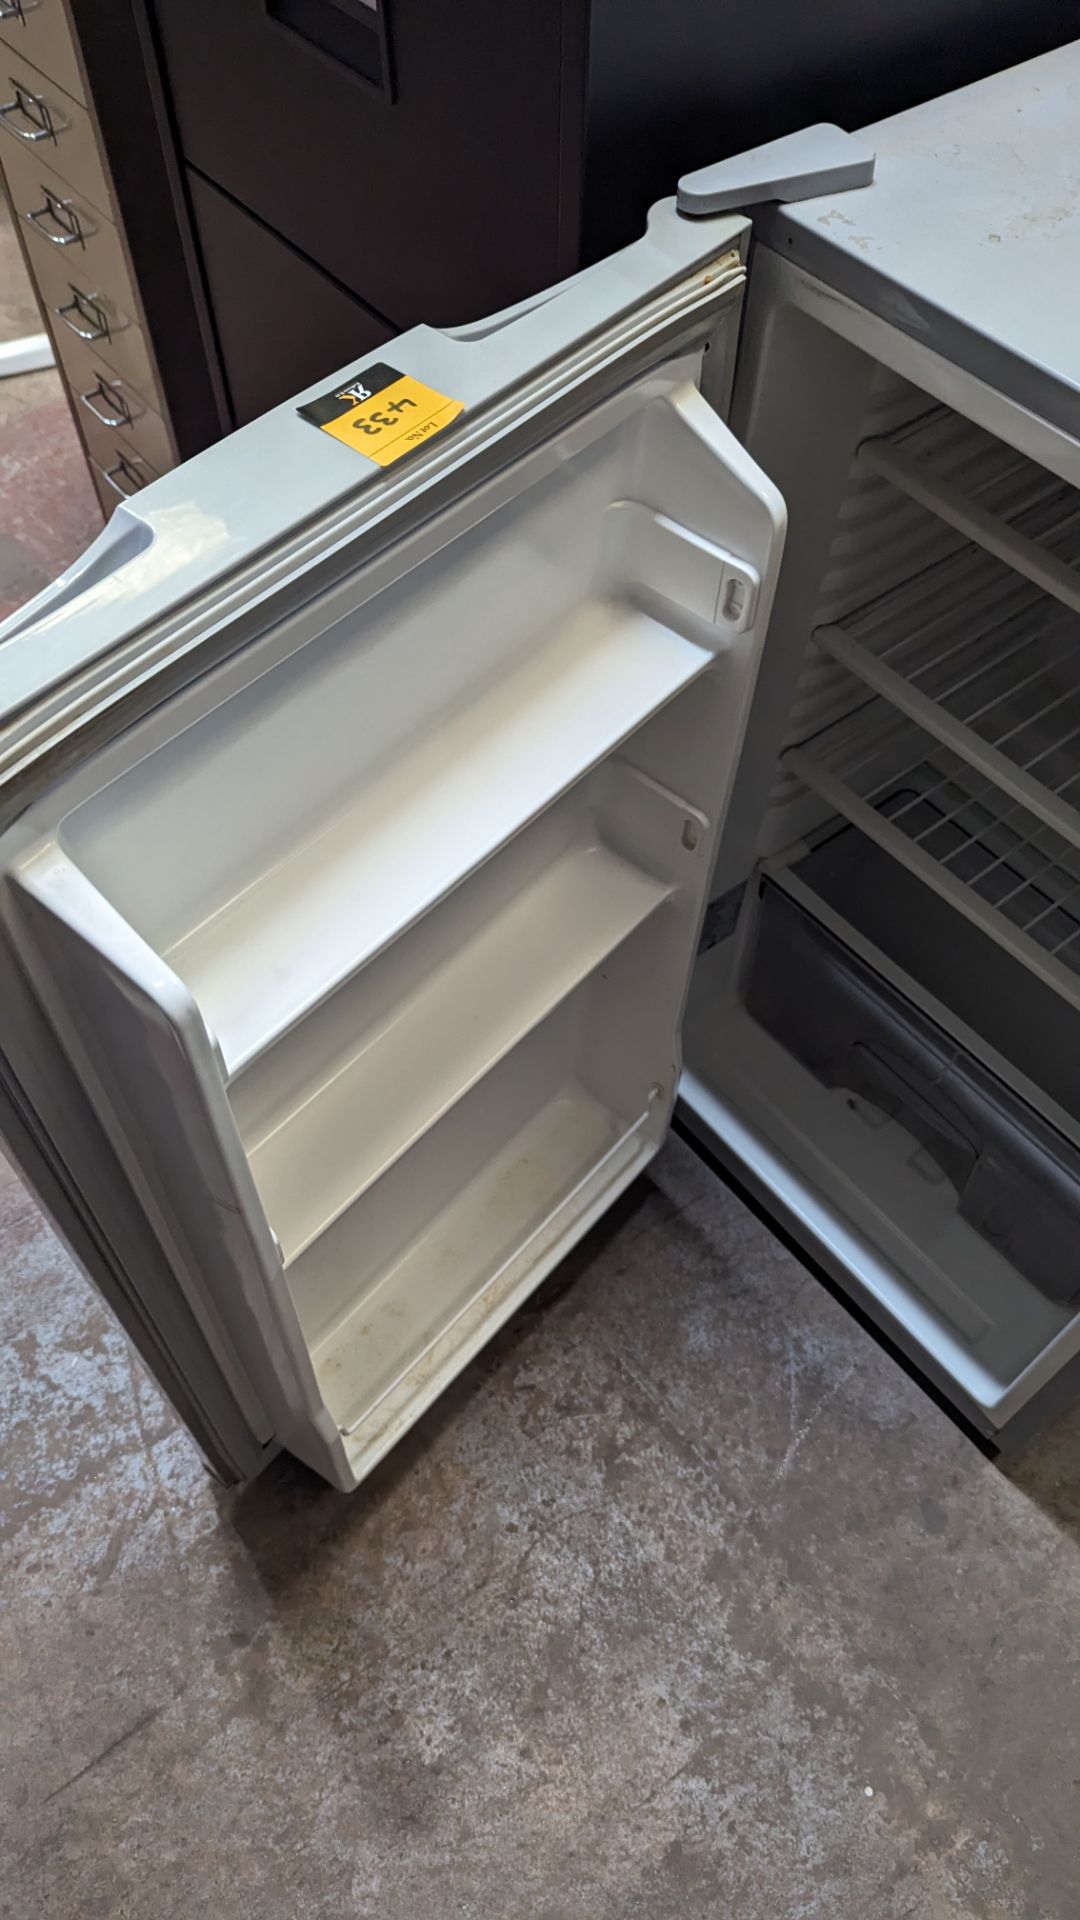 Baumatic pale grey counter height fridge - Image 6 of 8